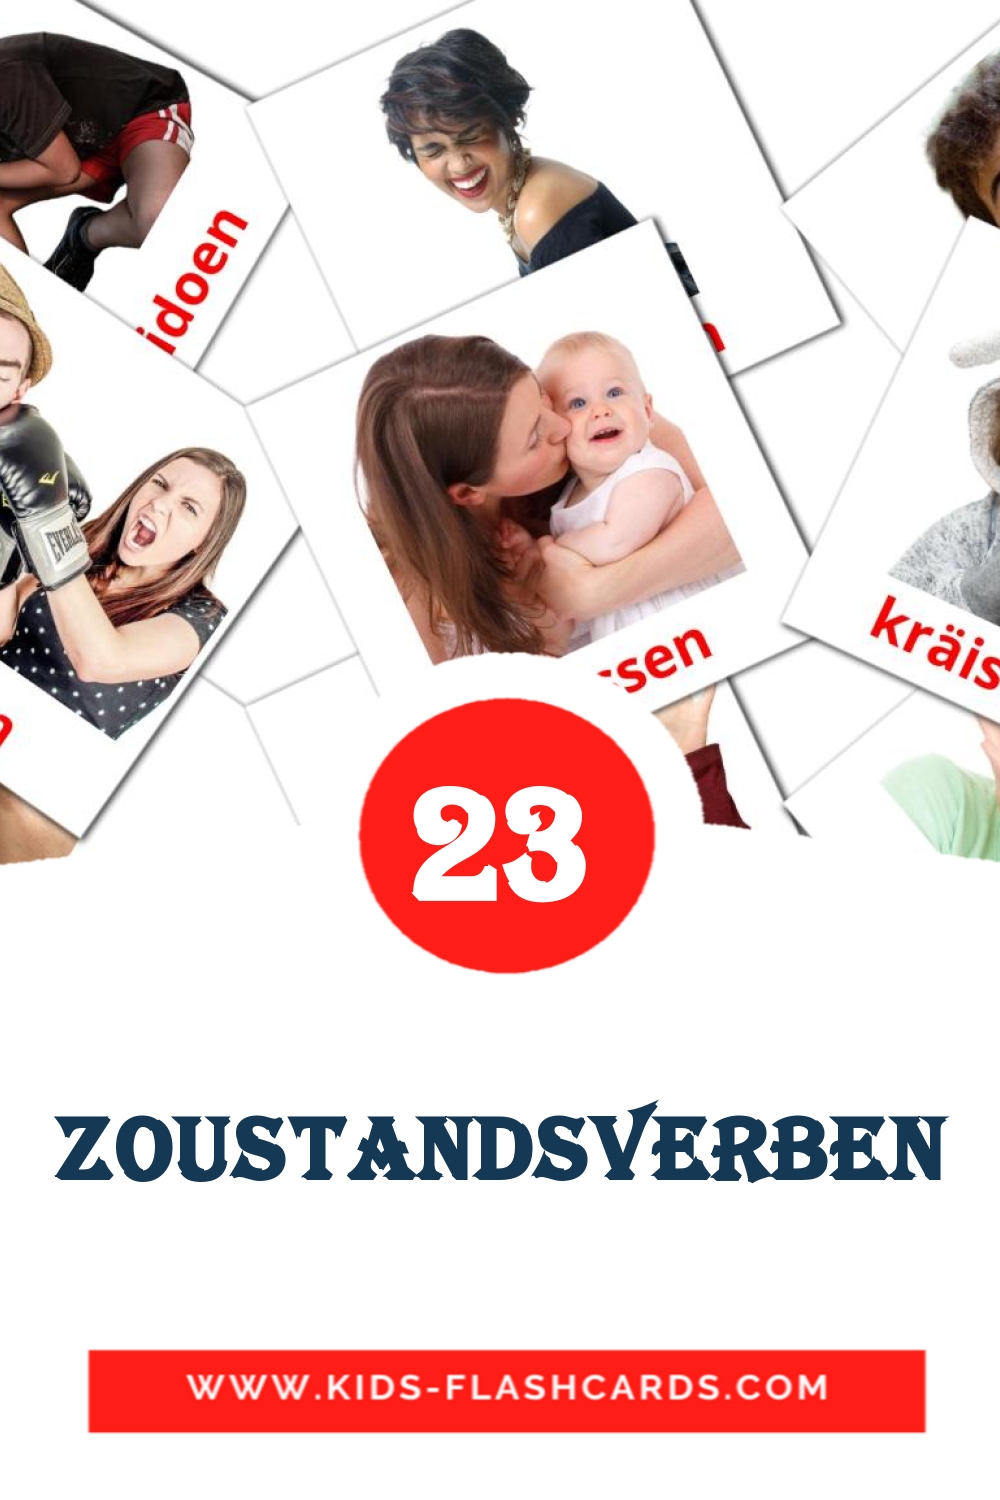 23 carte illustrate di Zoustandsverben per la scuola materna in lussemburghese